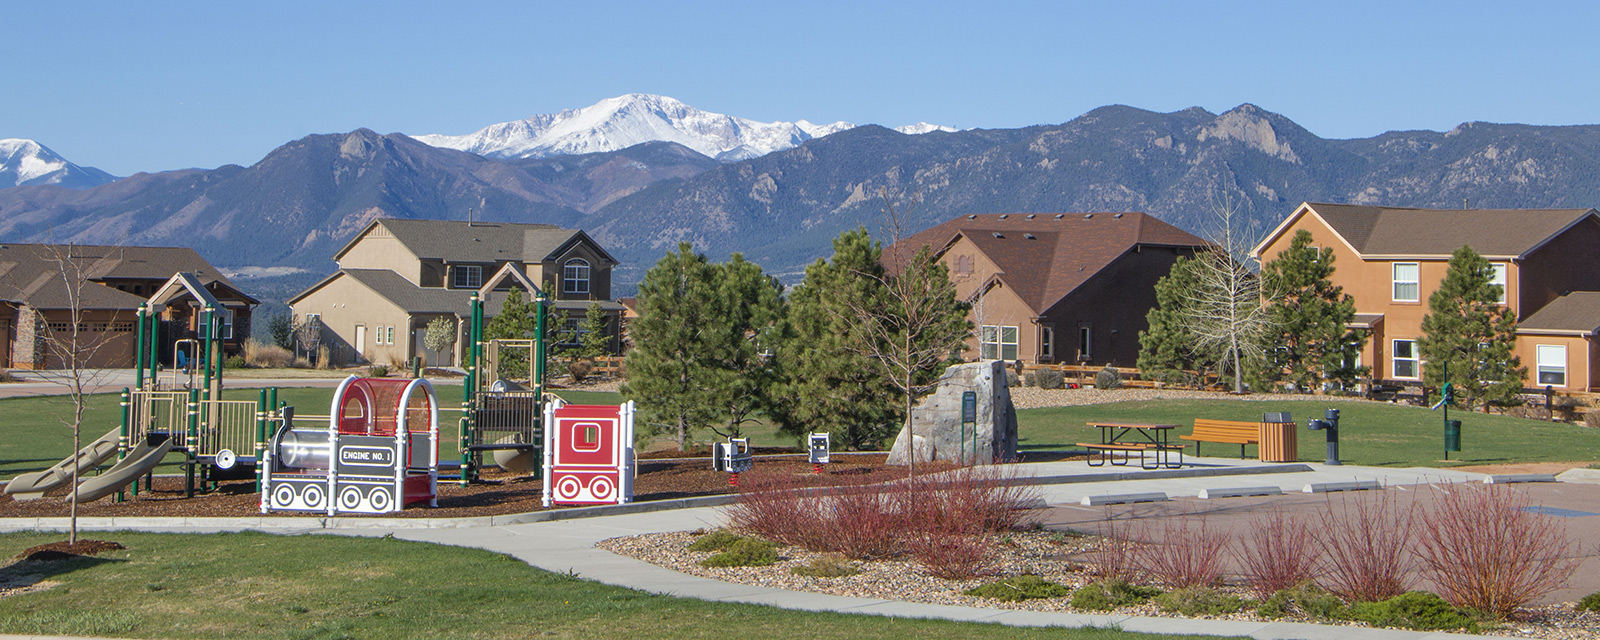 Jackson Creen Playground with Pike's Peak View Monument Colorado